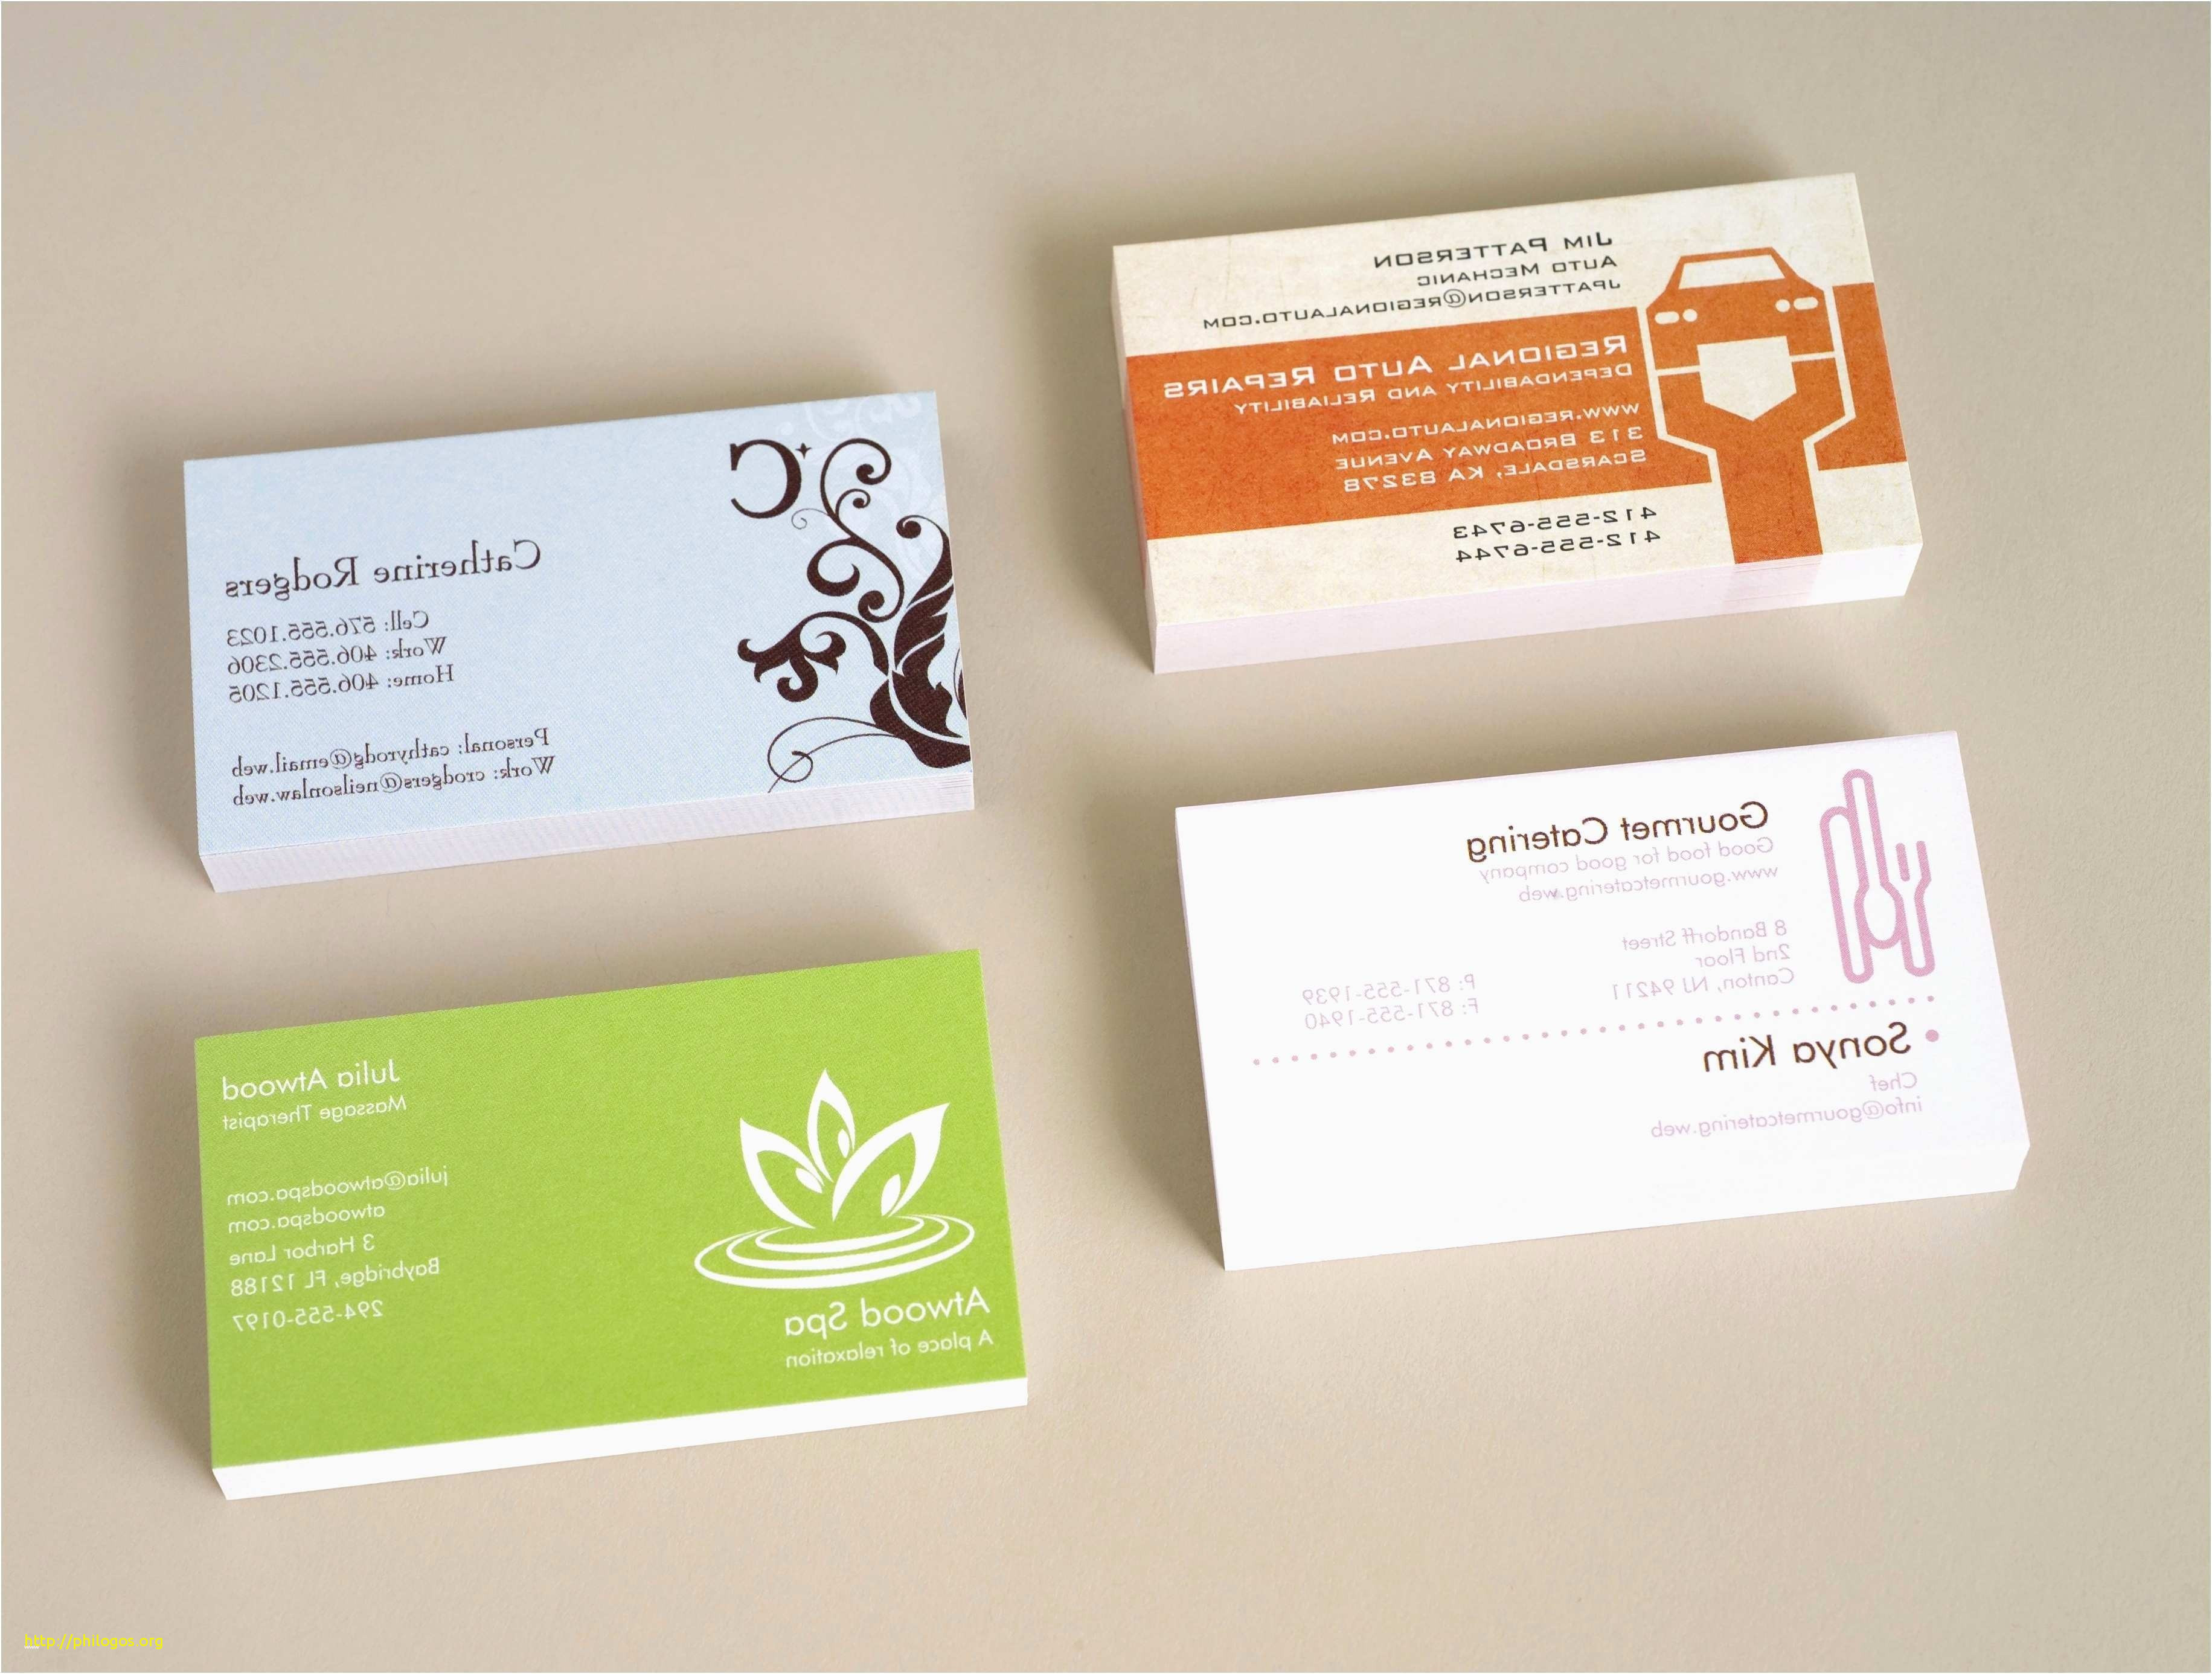 herbalife business card template beautiful 20 herbalife business card templates valid herbalife business cards of herbalife business card template